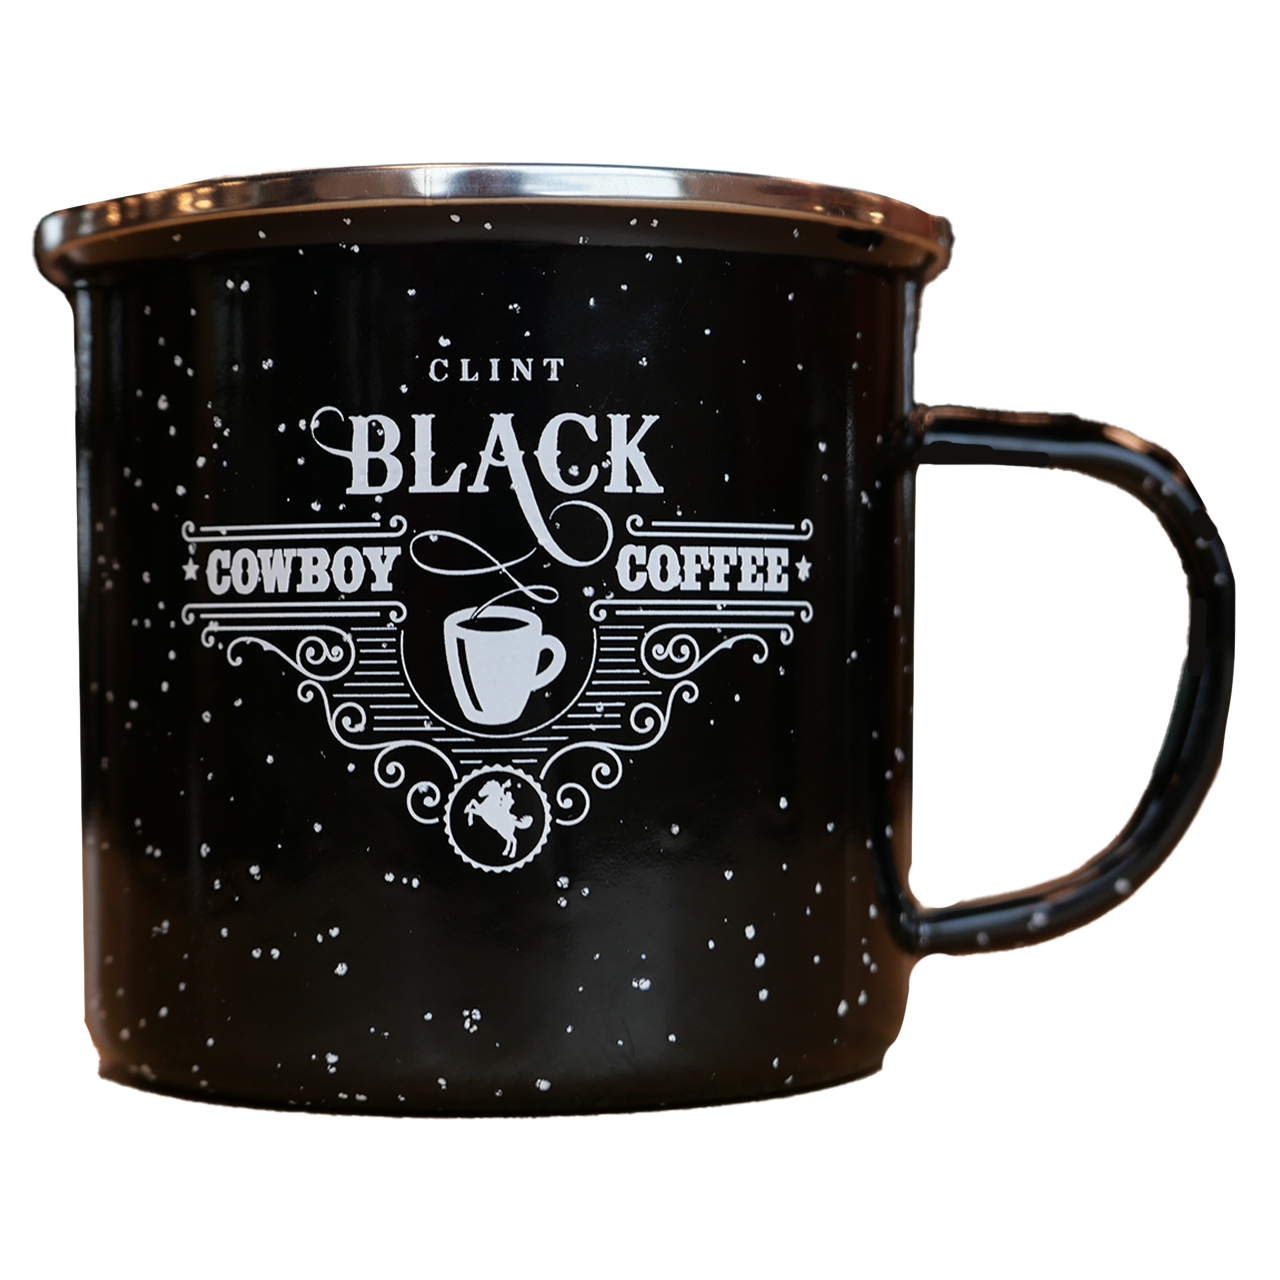 Cowboy Coffee Black Camp Mug